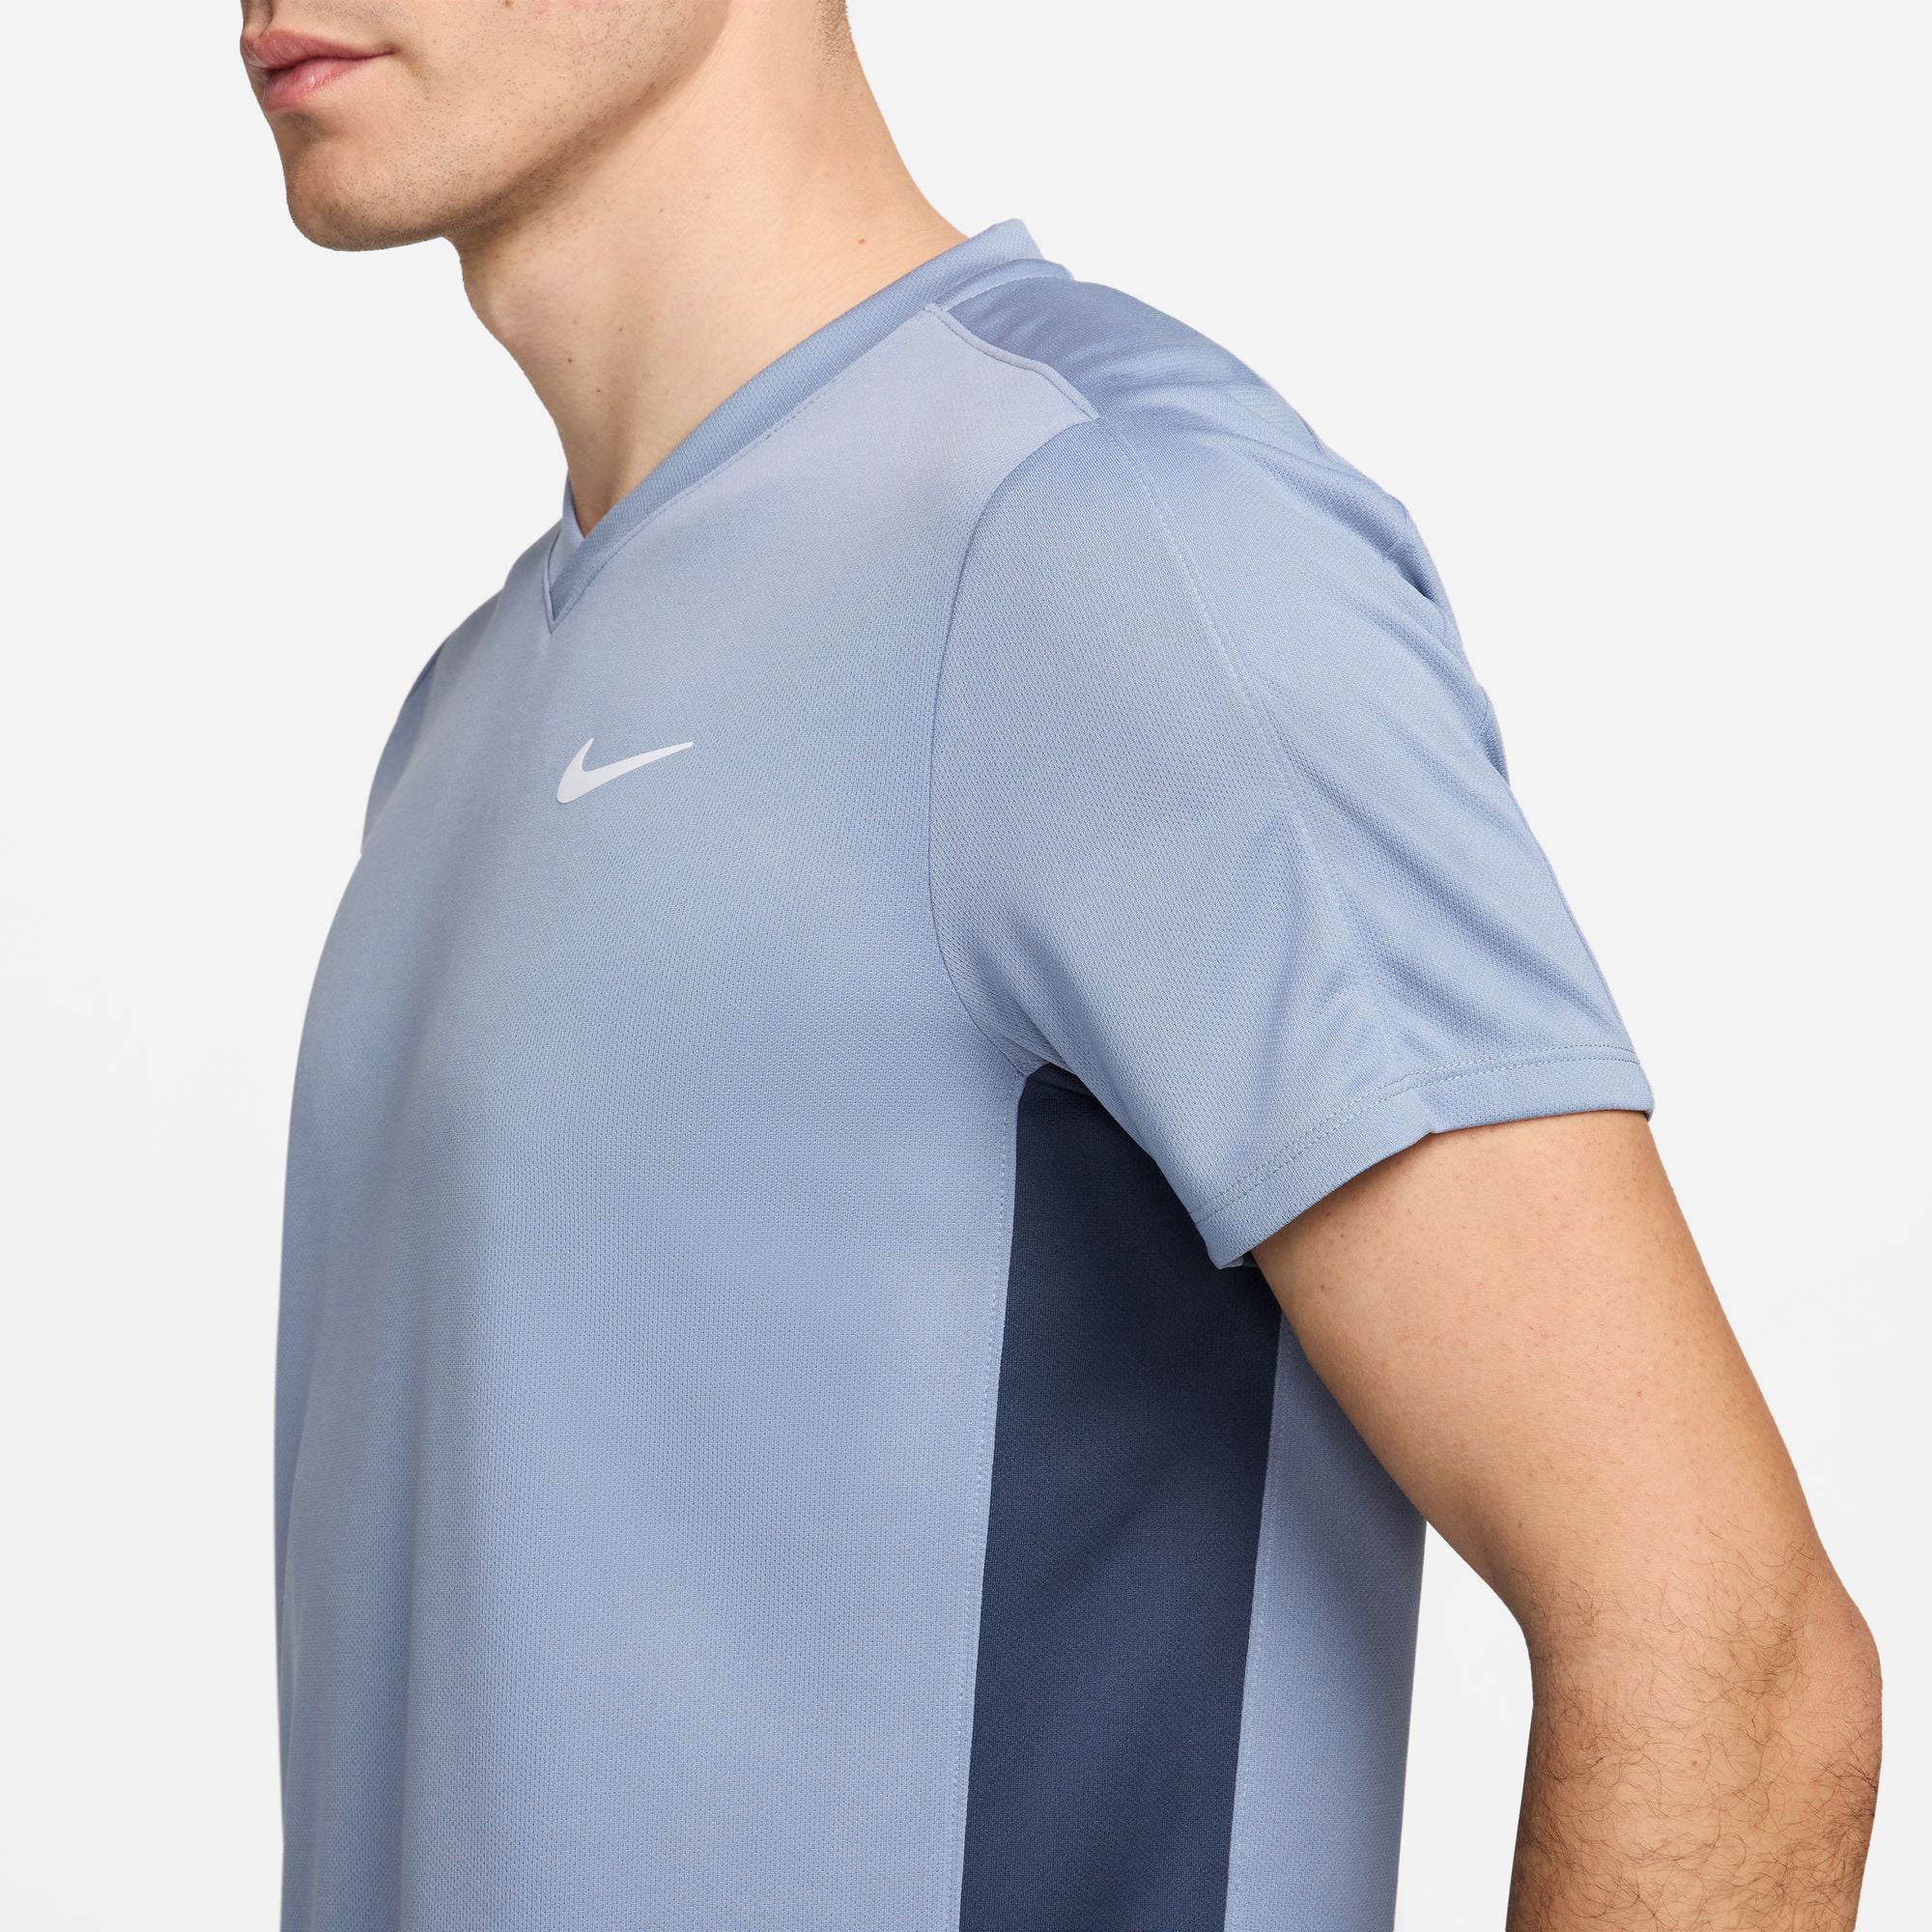 NikeCourt Victory Men's Dri-FIT Tennis Shirt - Blue (4)